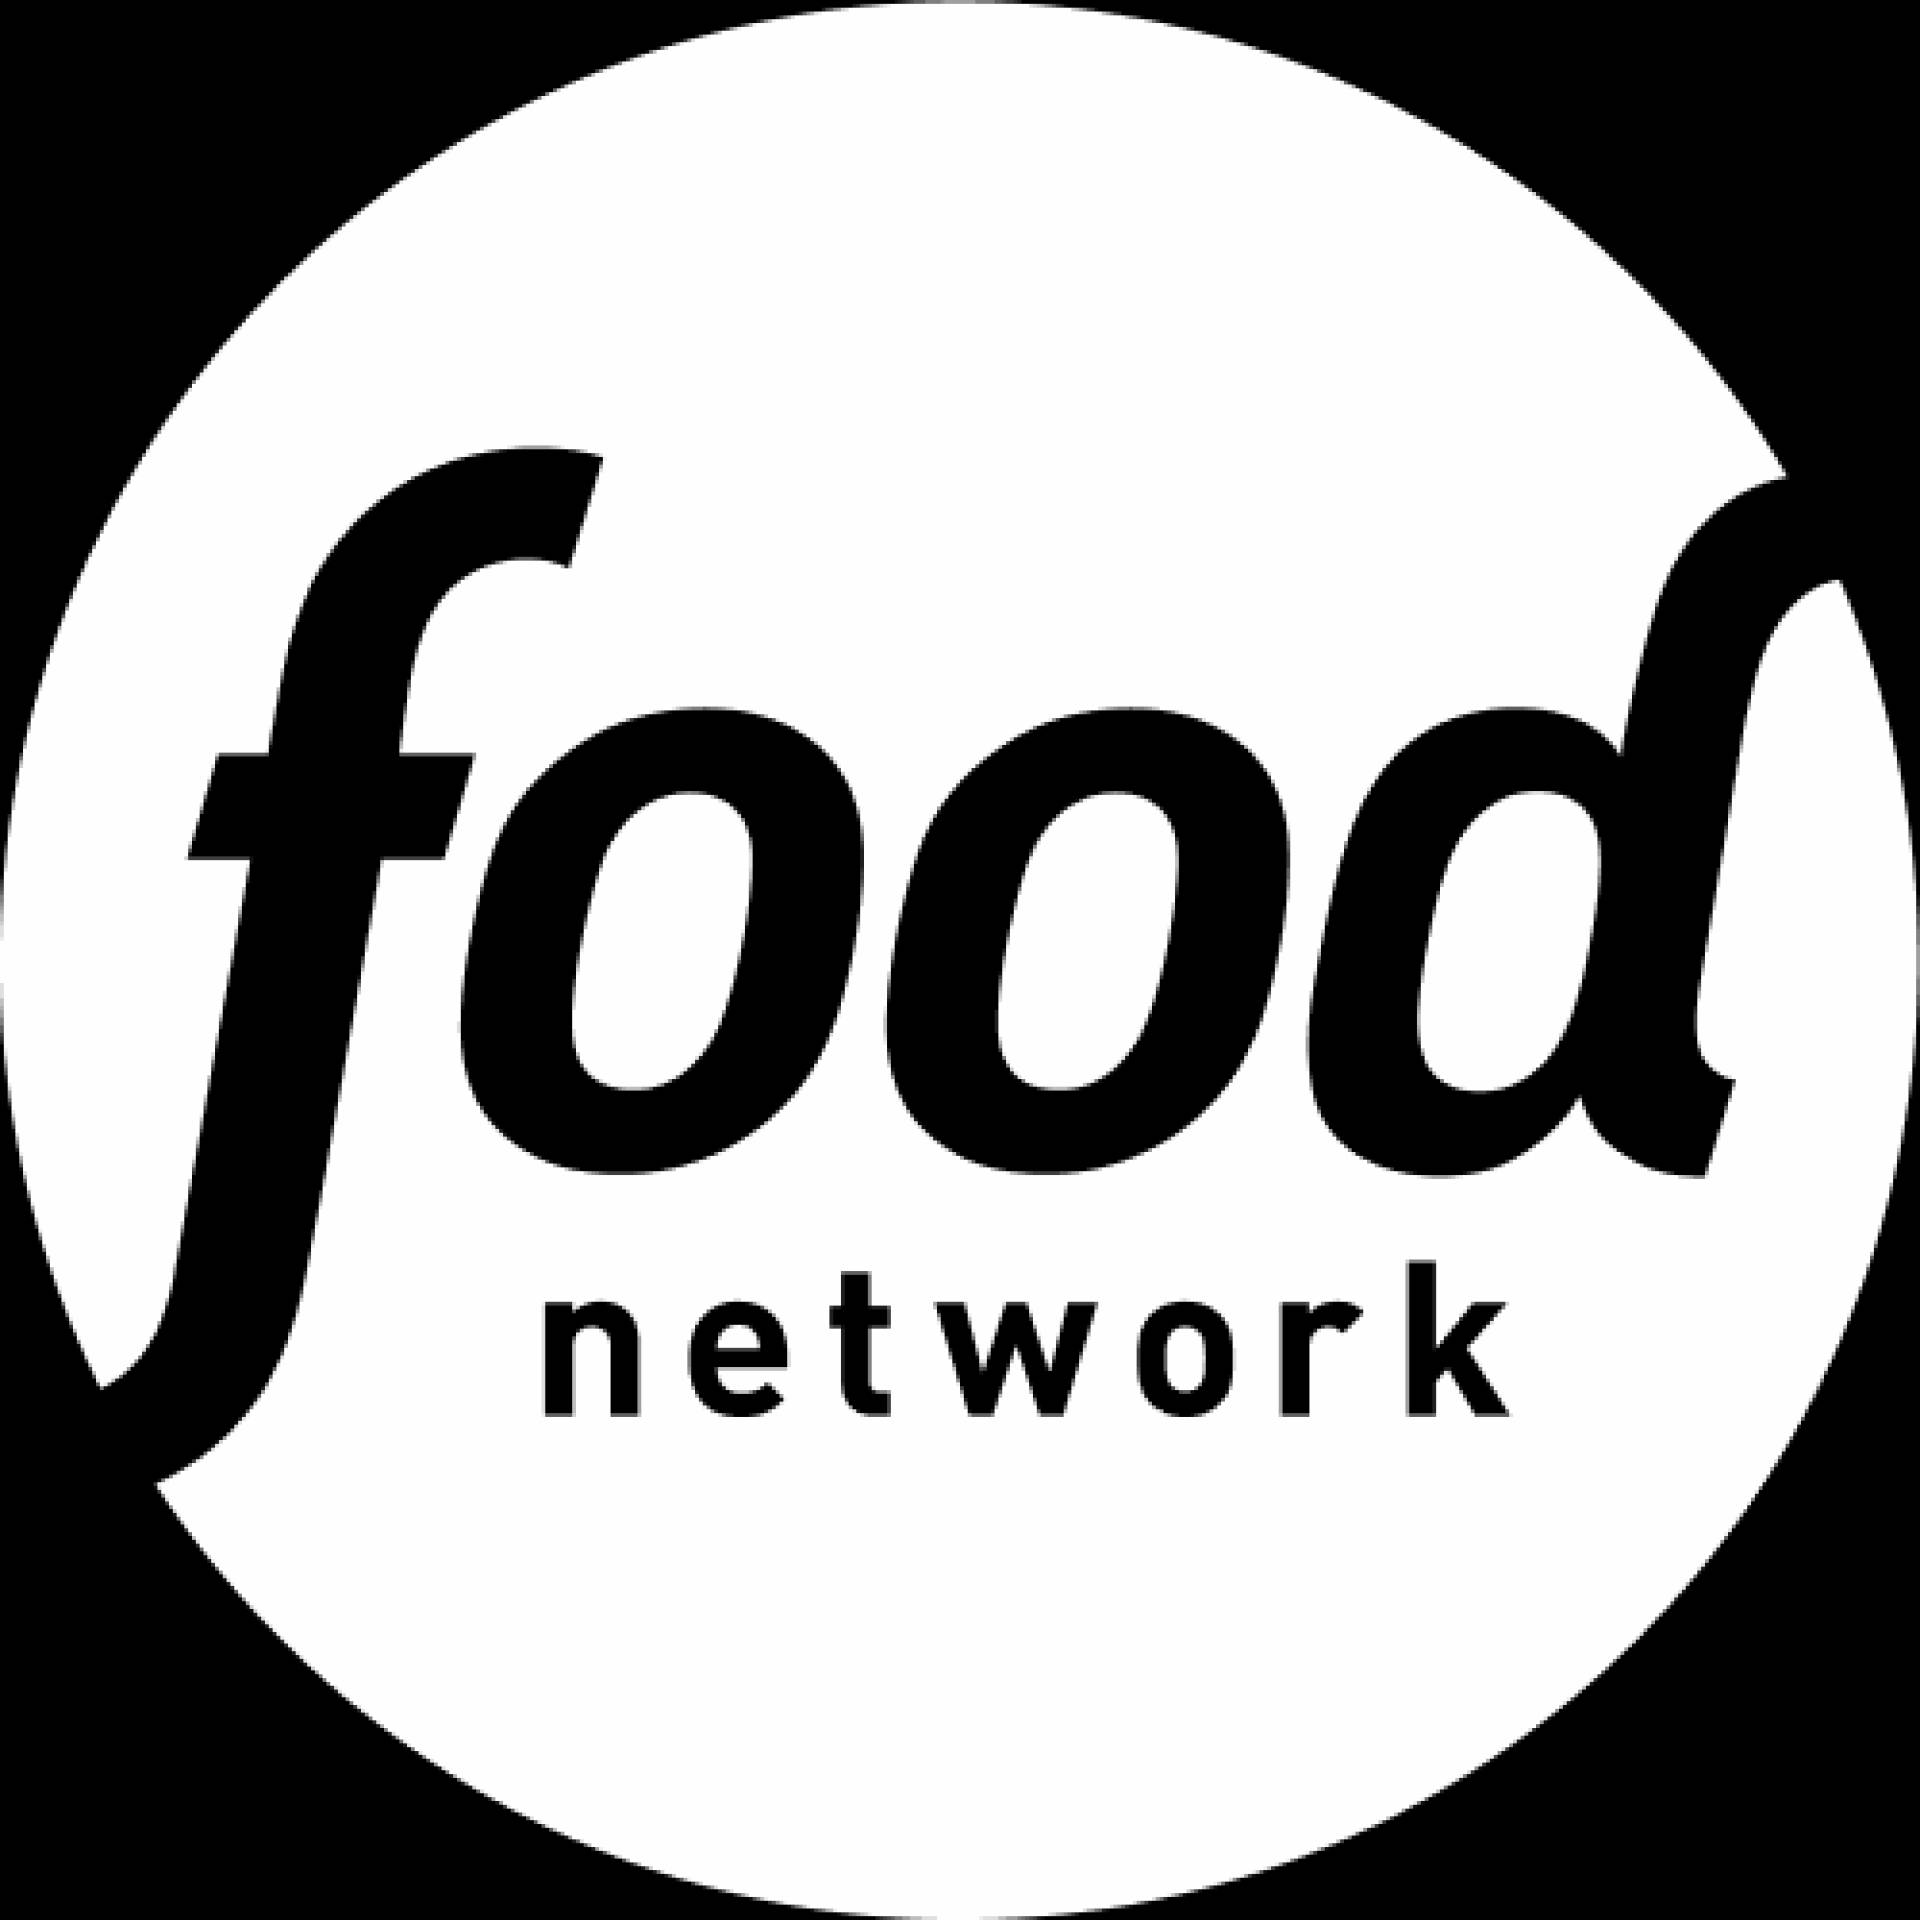 food network logo png